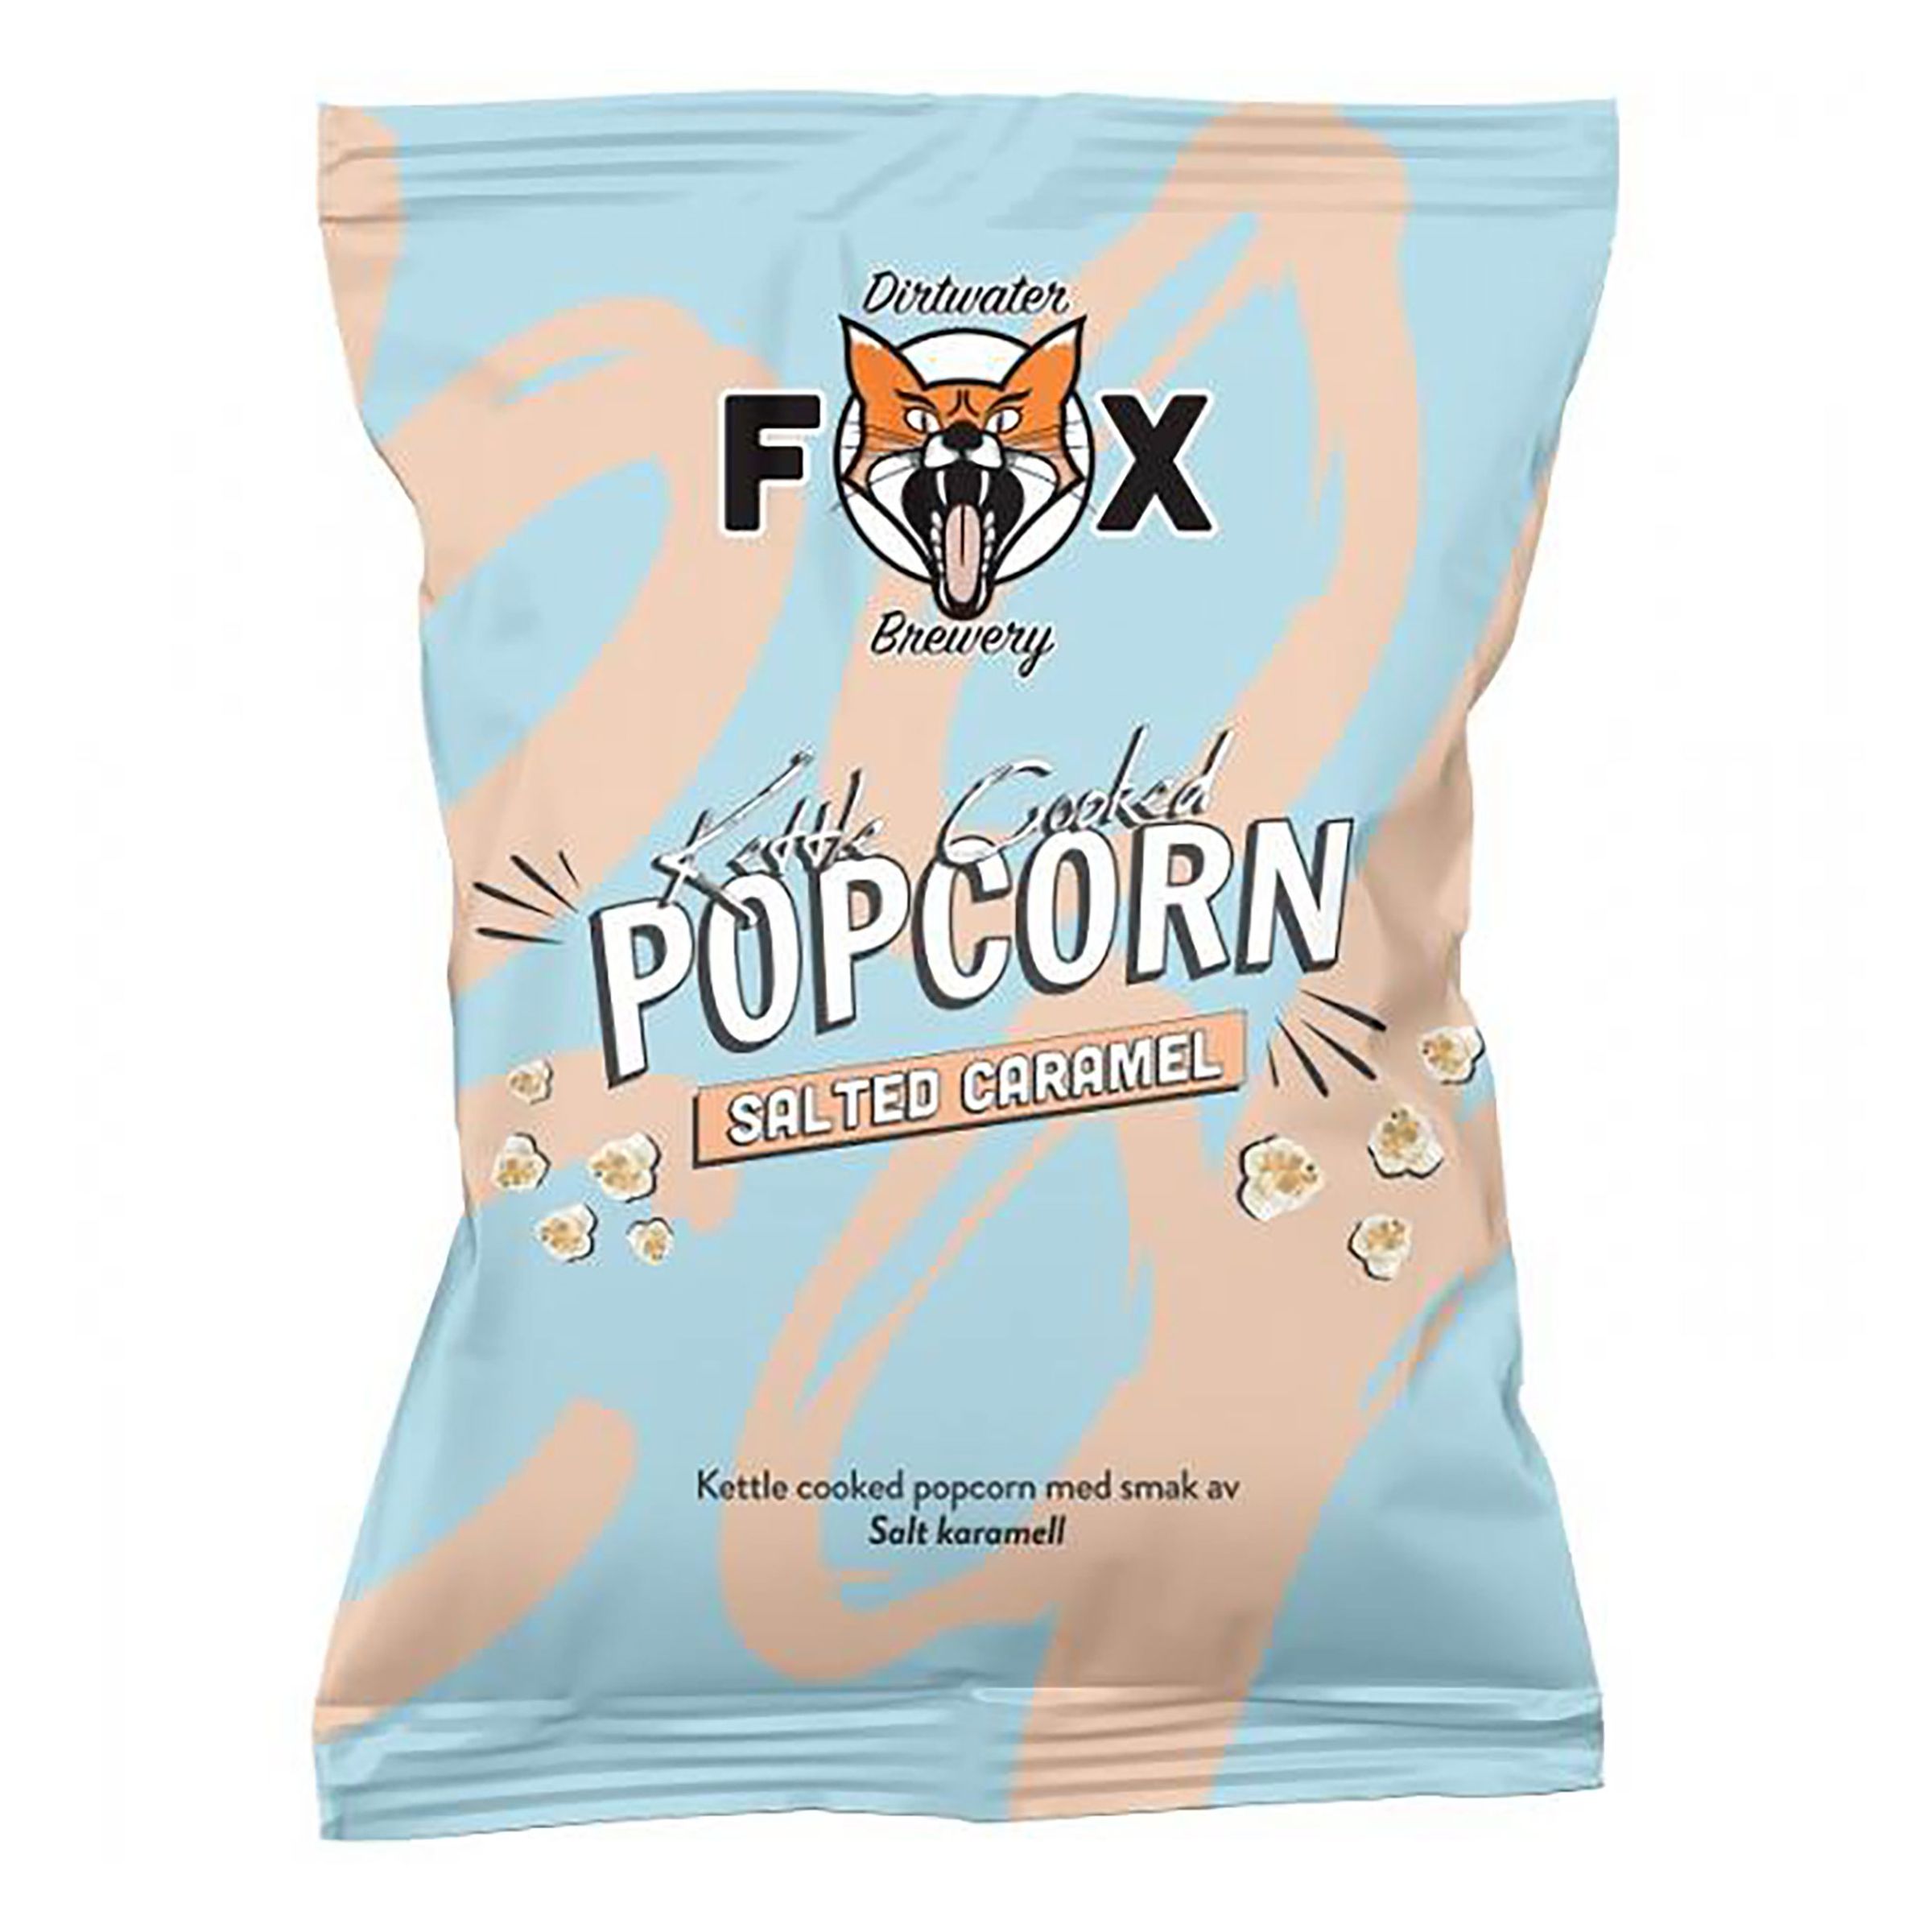 Dirtwater Fox Popcorn Salted Caramel - 65 gram